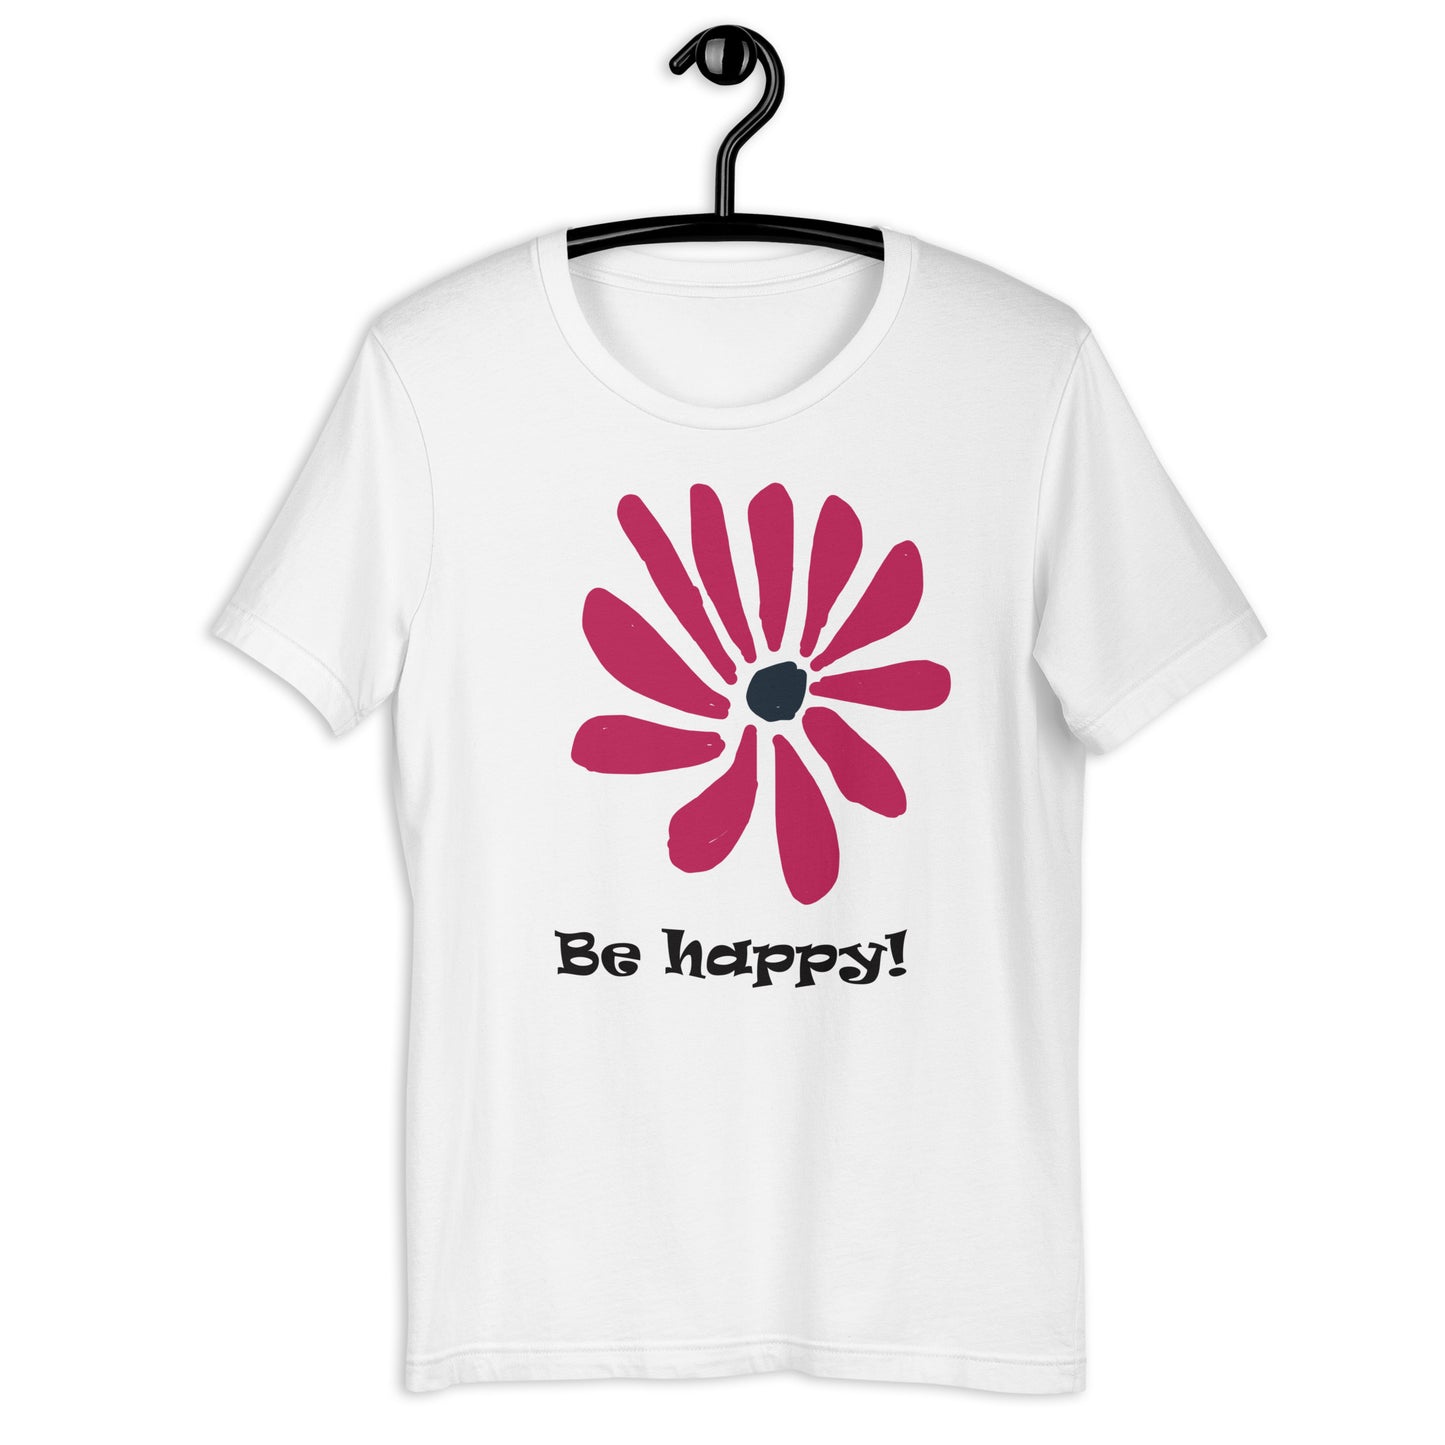 Be happy! Unisex t-shirt